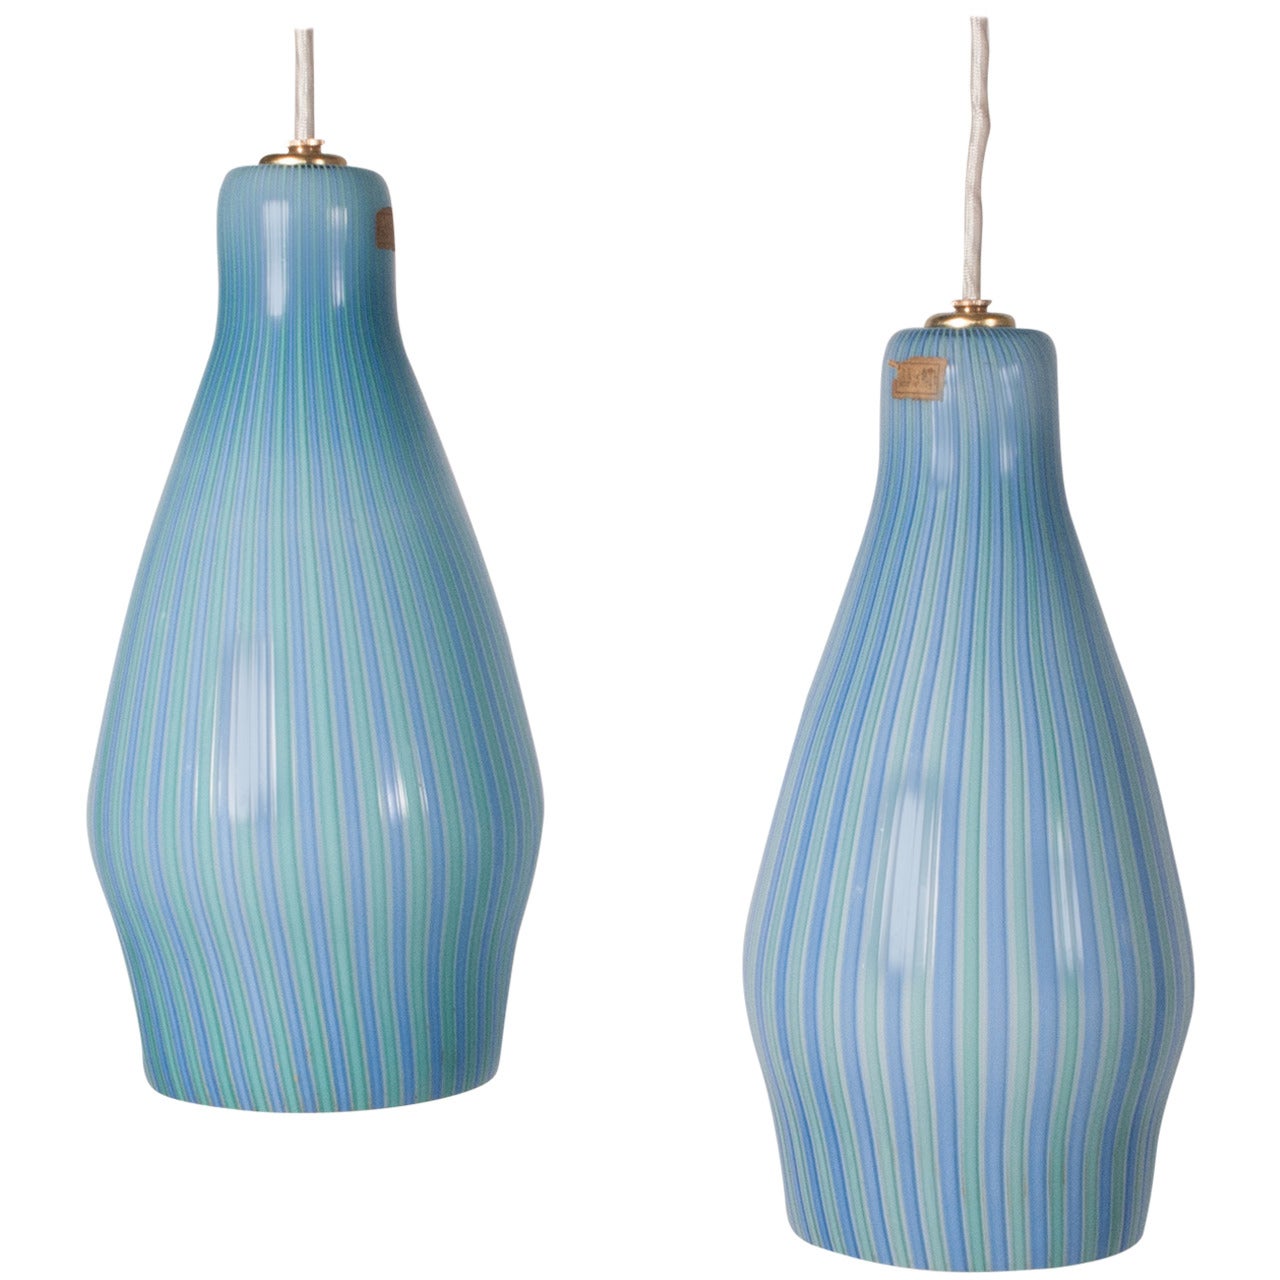 Pair of Pendant Lamps by Venini